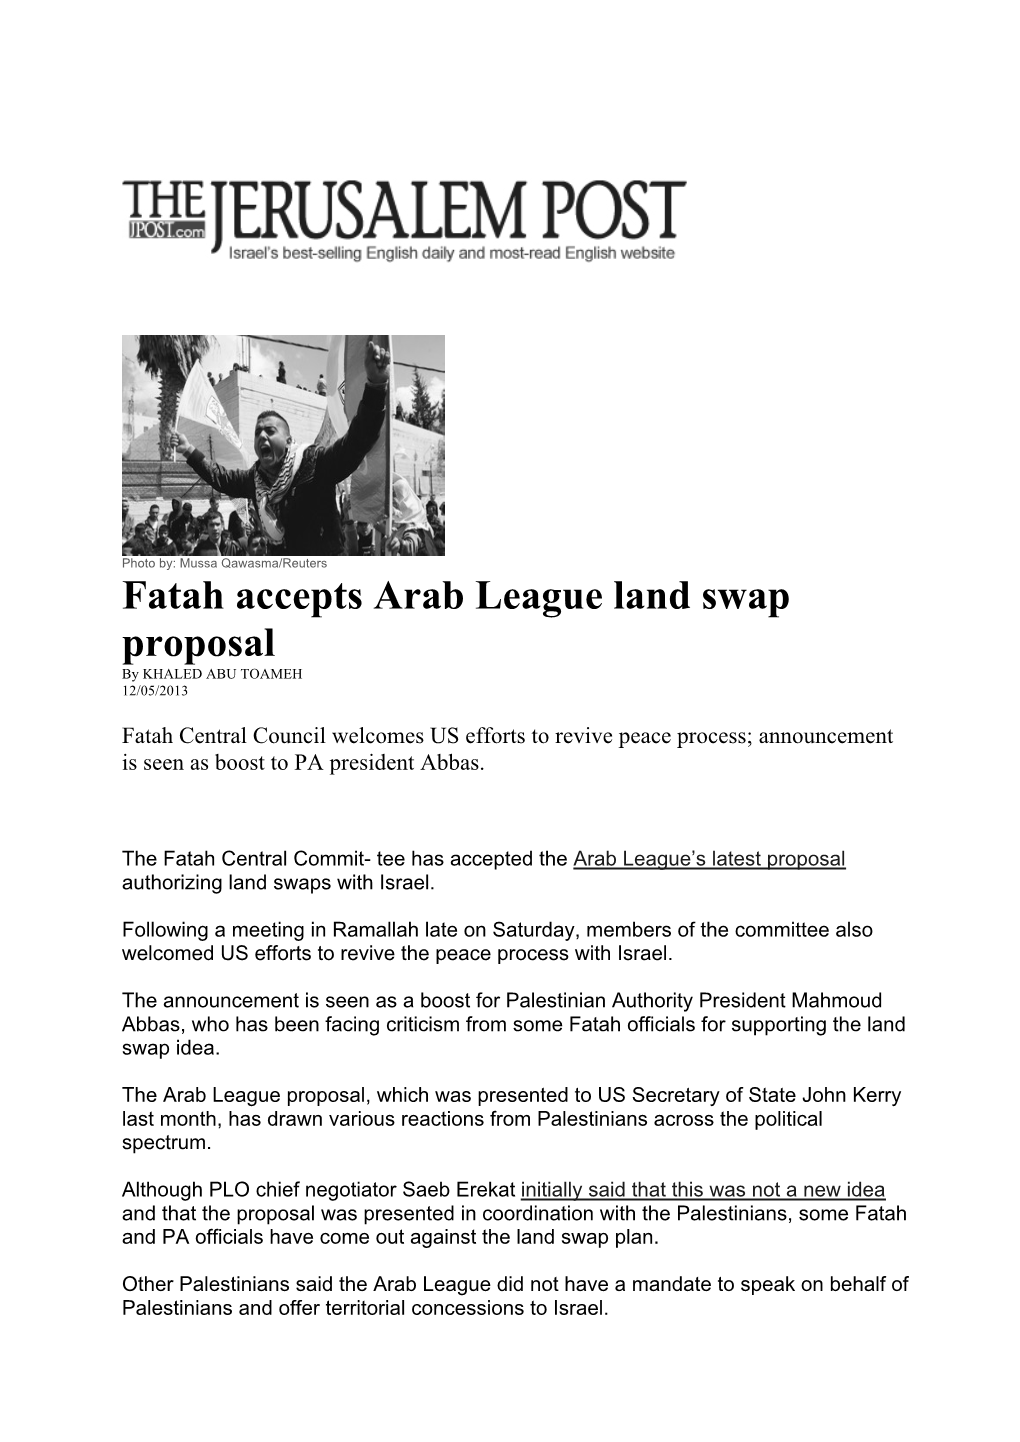 Fatah Accepts Arab League Land Swap Proposal by KHALED ABU TOAMEH 12/05/2013